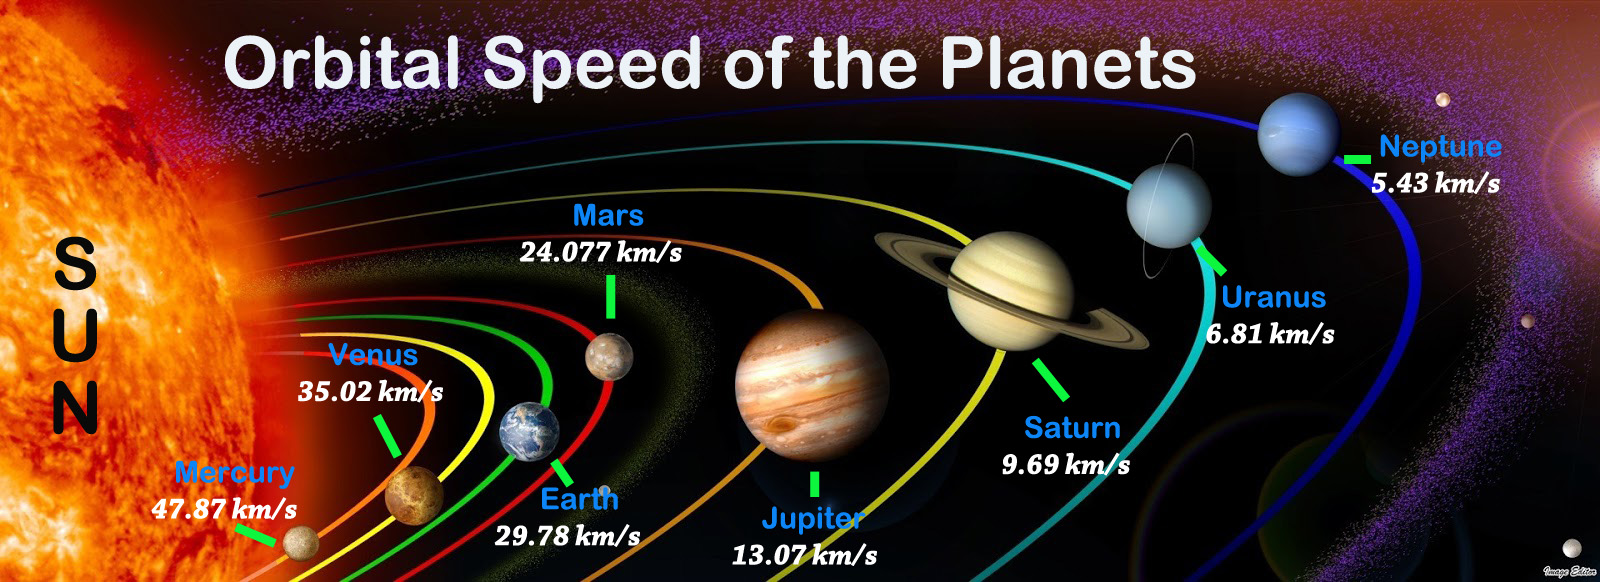 http://planetfacts.org/wp-content/uploads/2013/05/Planets-Orbital-Speeds.jpg